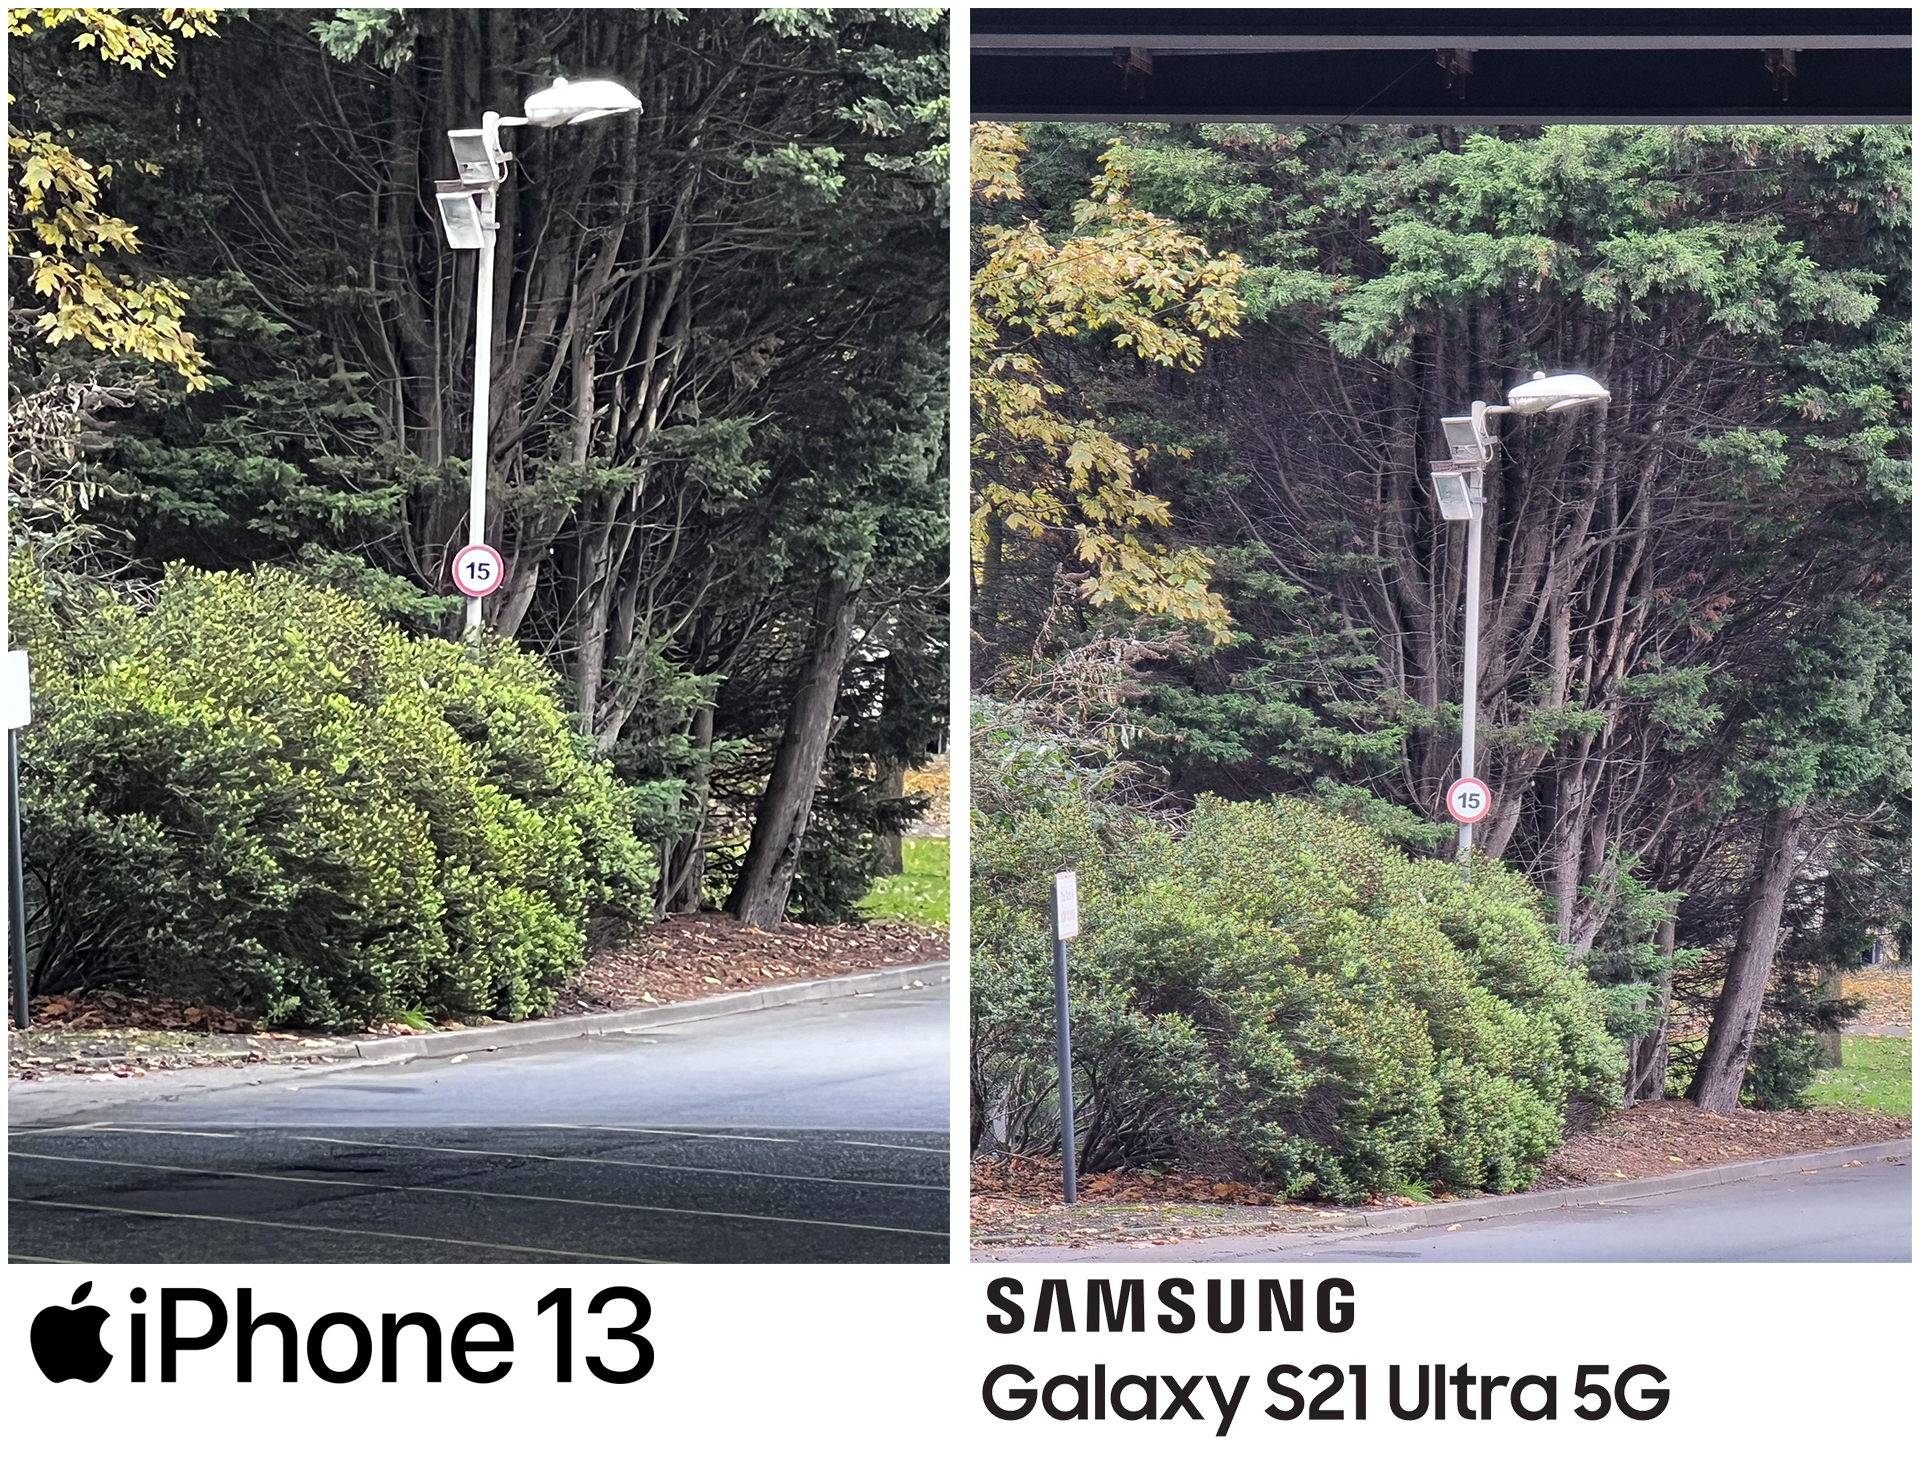 Samsung Galaxy S21 Ultra low light camera test 